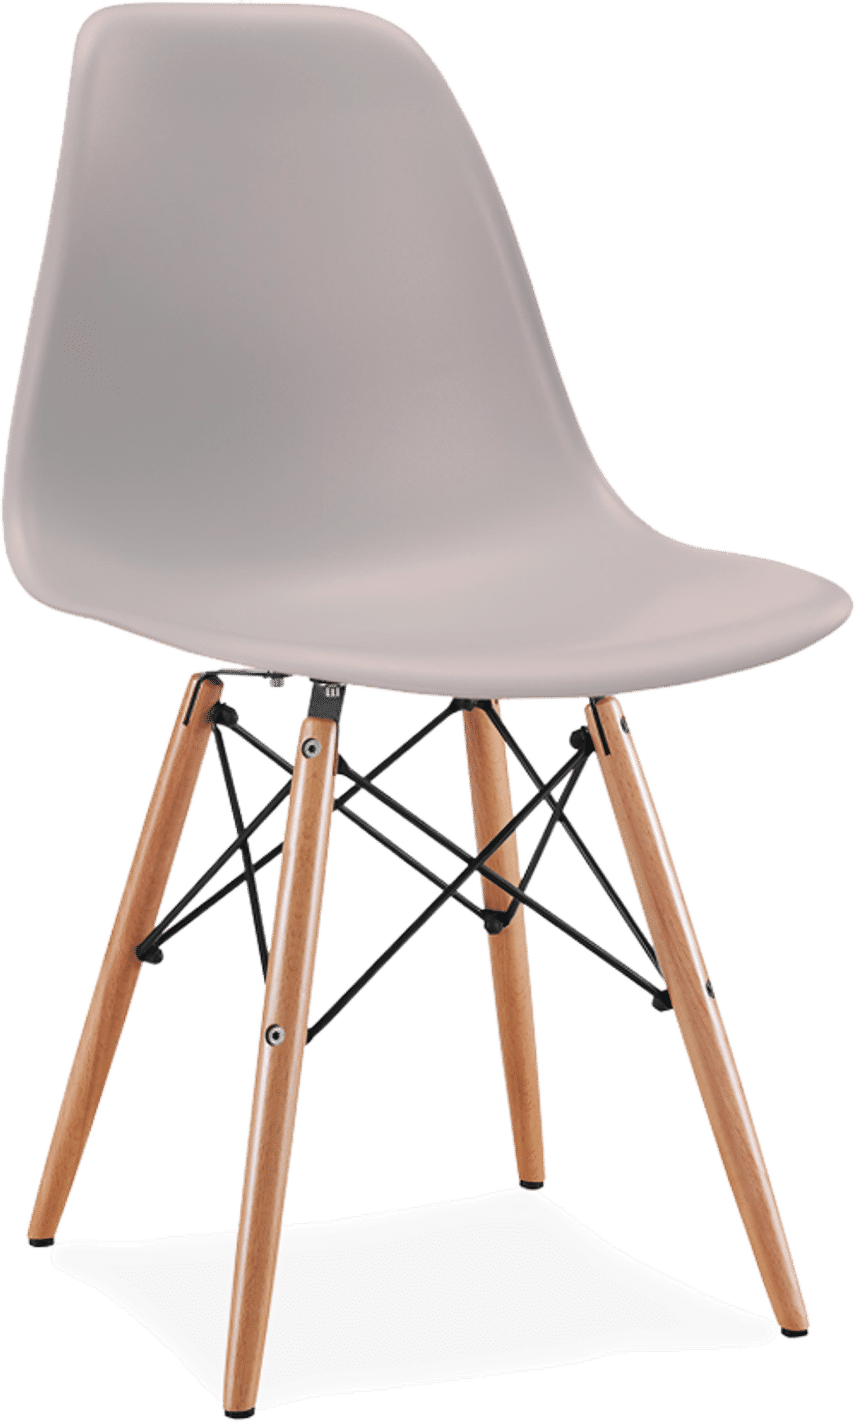 DSW Style Chair Light Grey/Light Wood image.